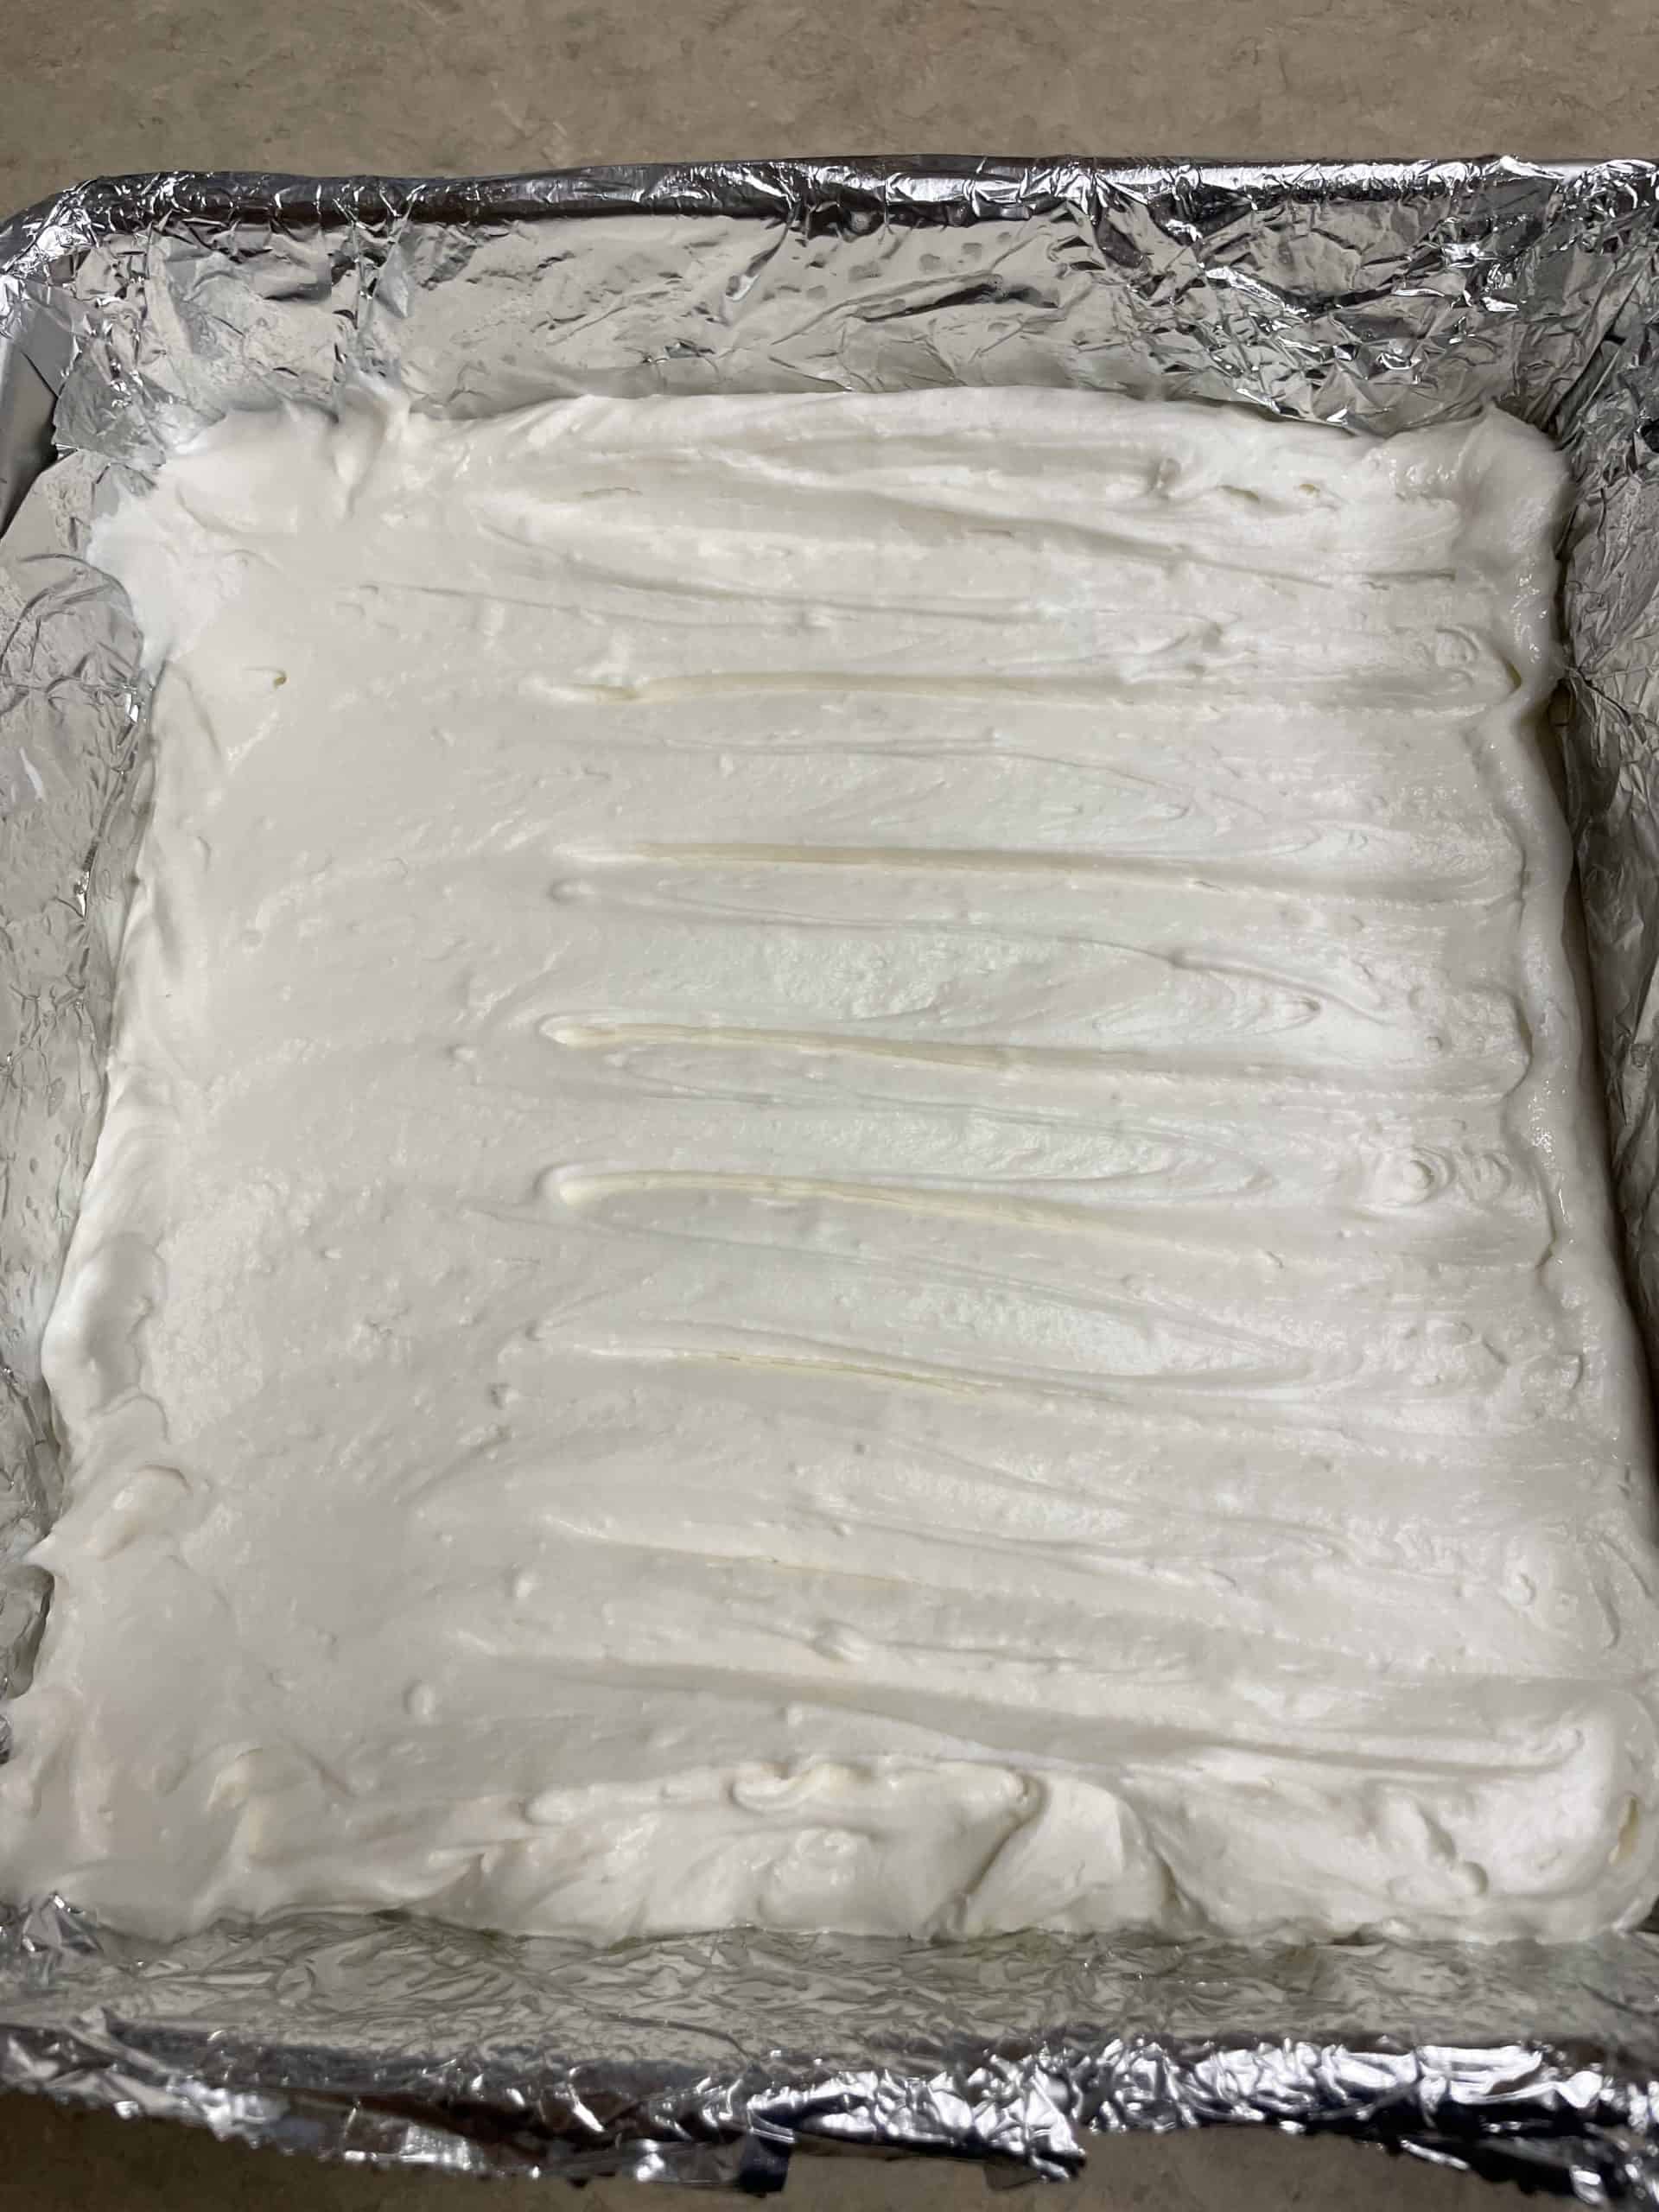 White Chocolate Fudge spread into a pan.